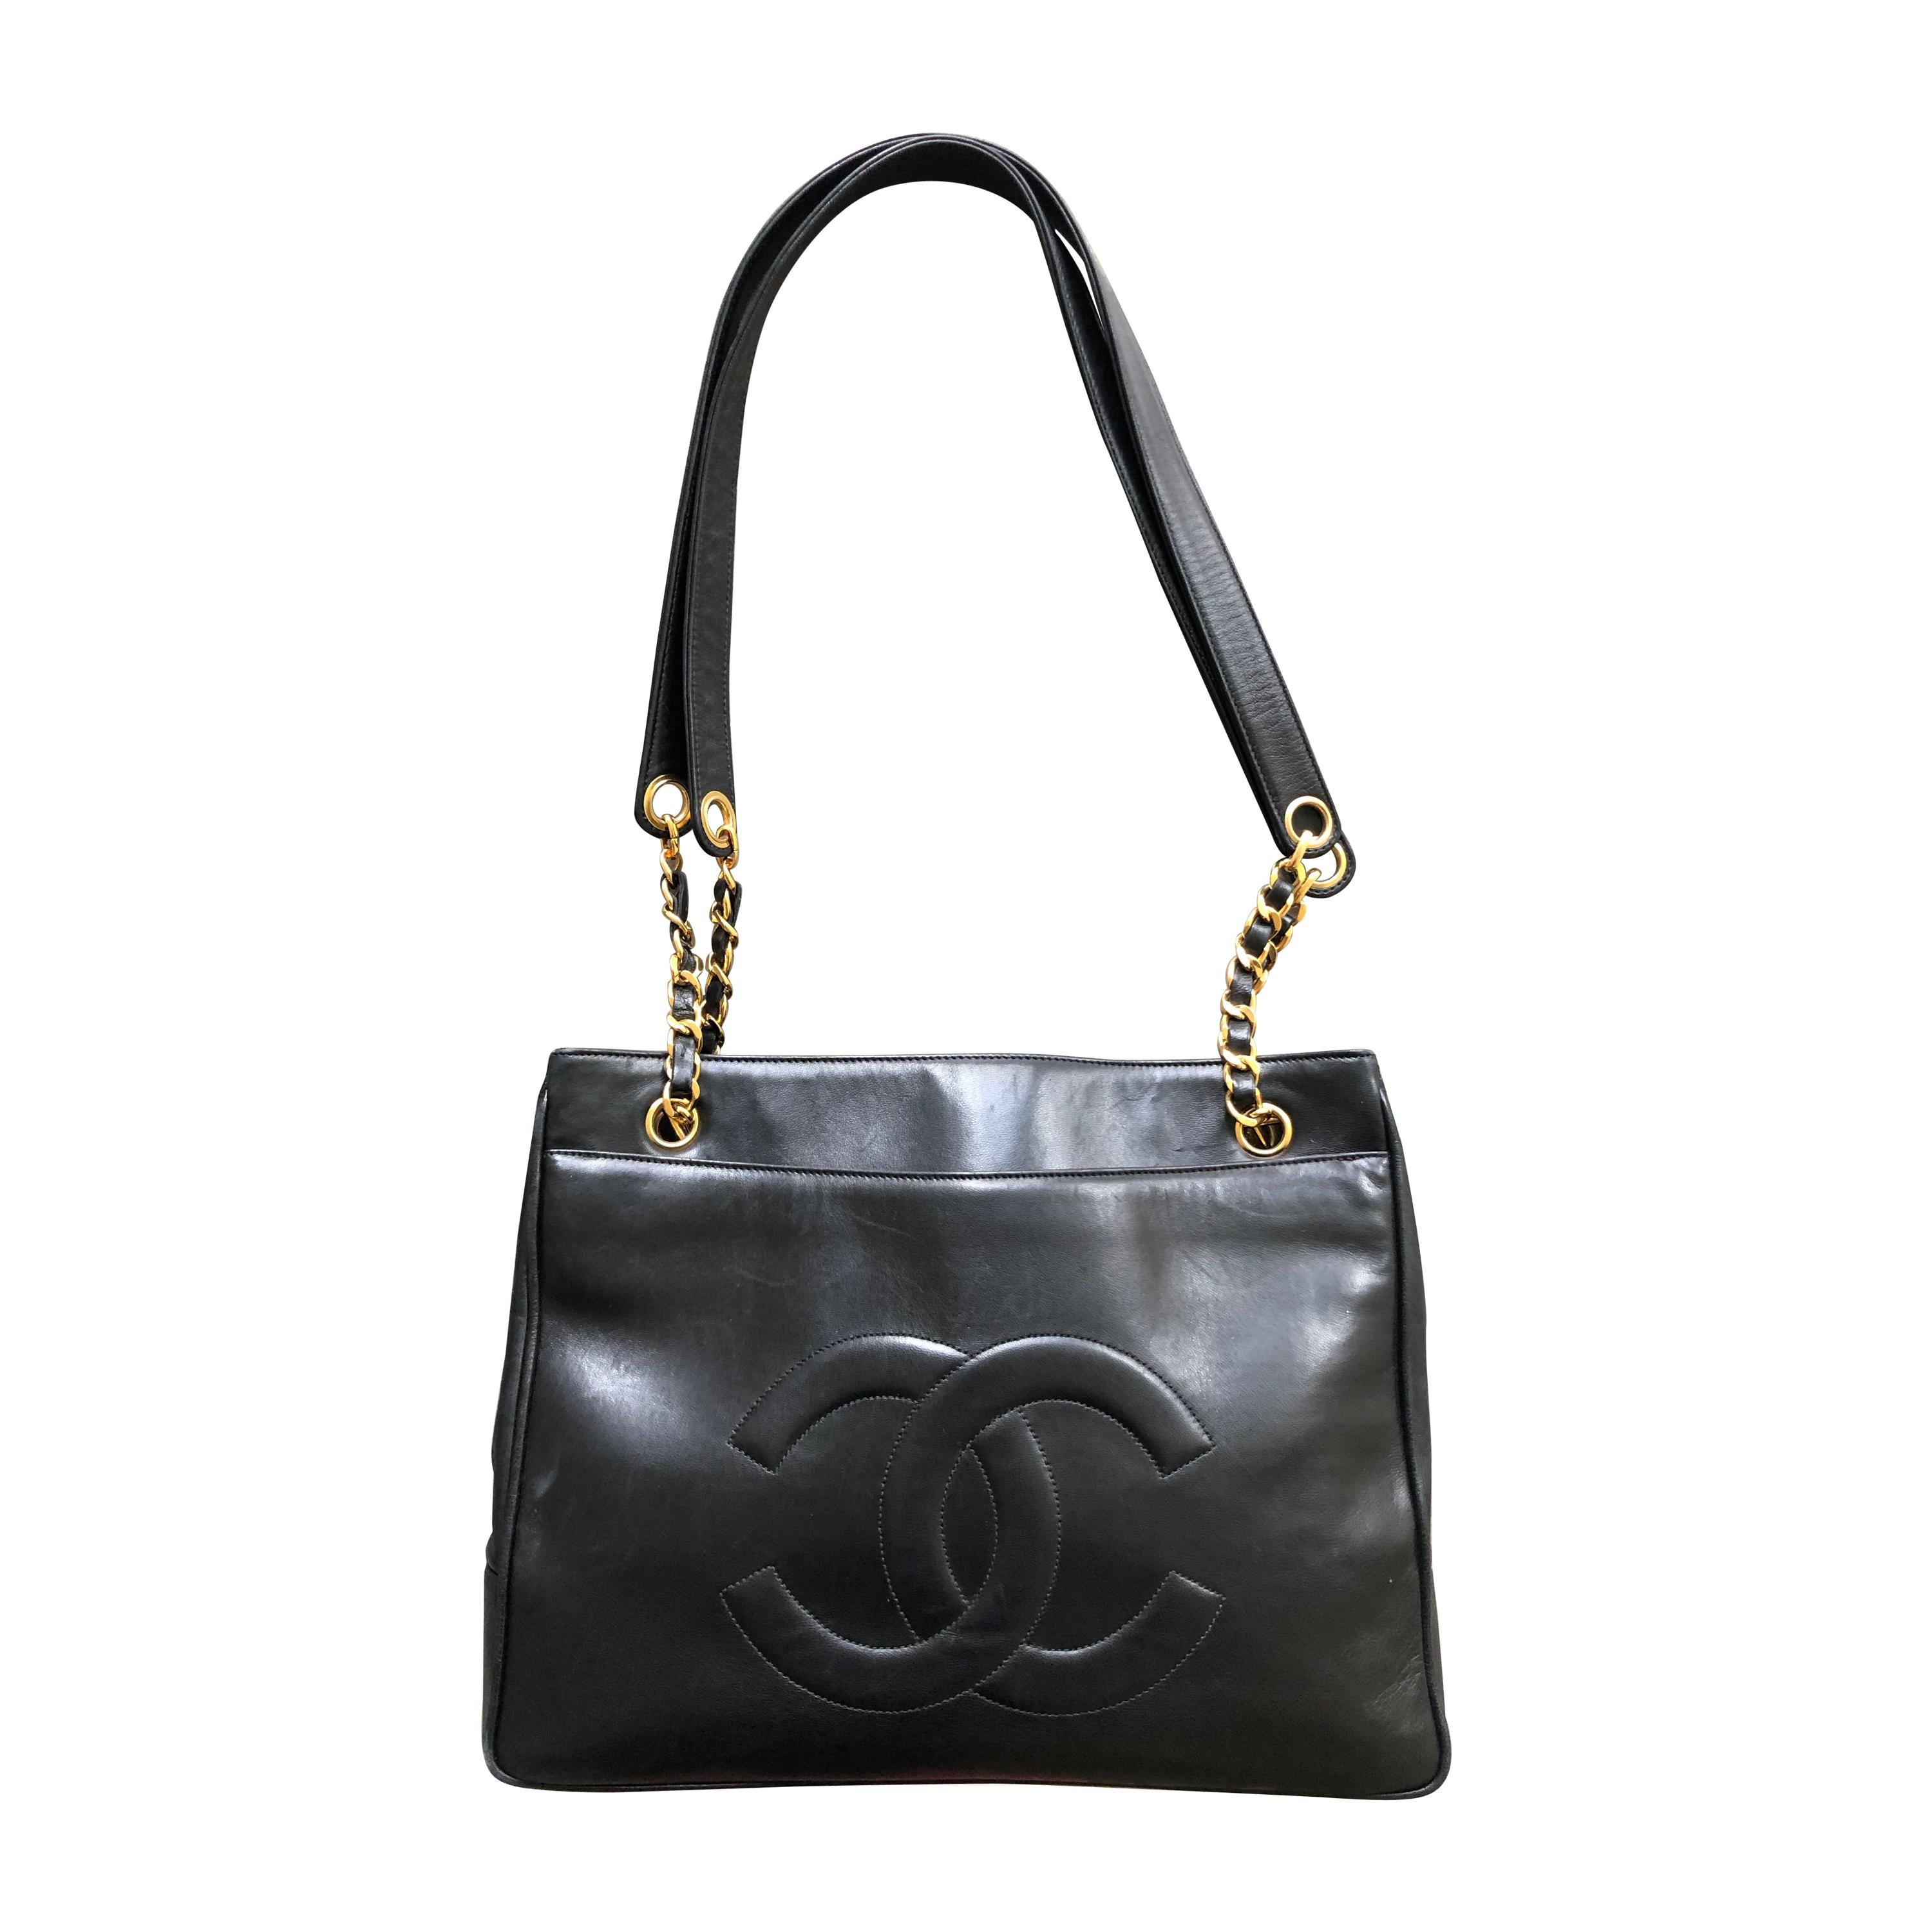 Chanel Large Vintage Black Leather Shopping Bag w Large CC Logo & Gold Hardware For Sale